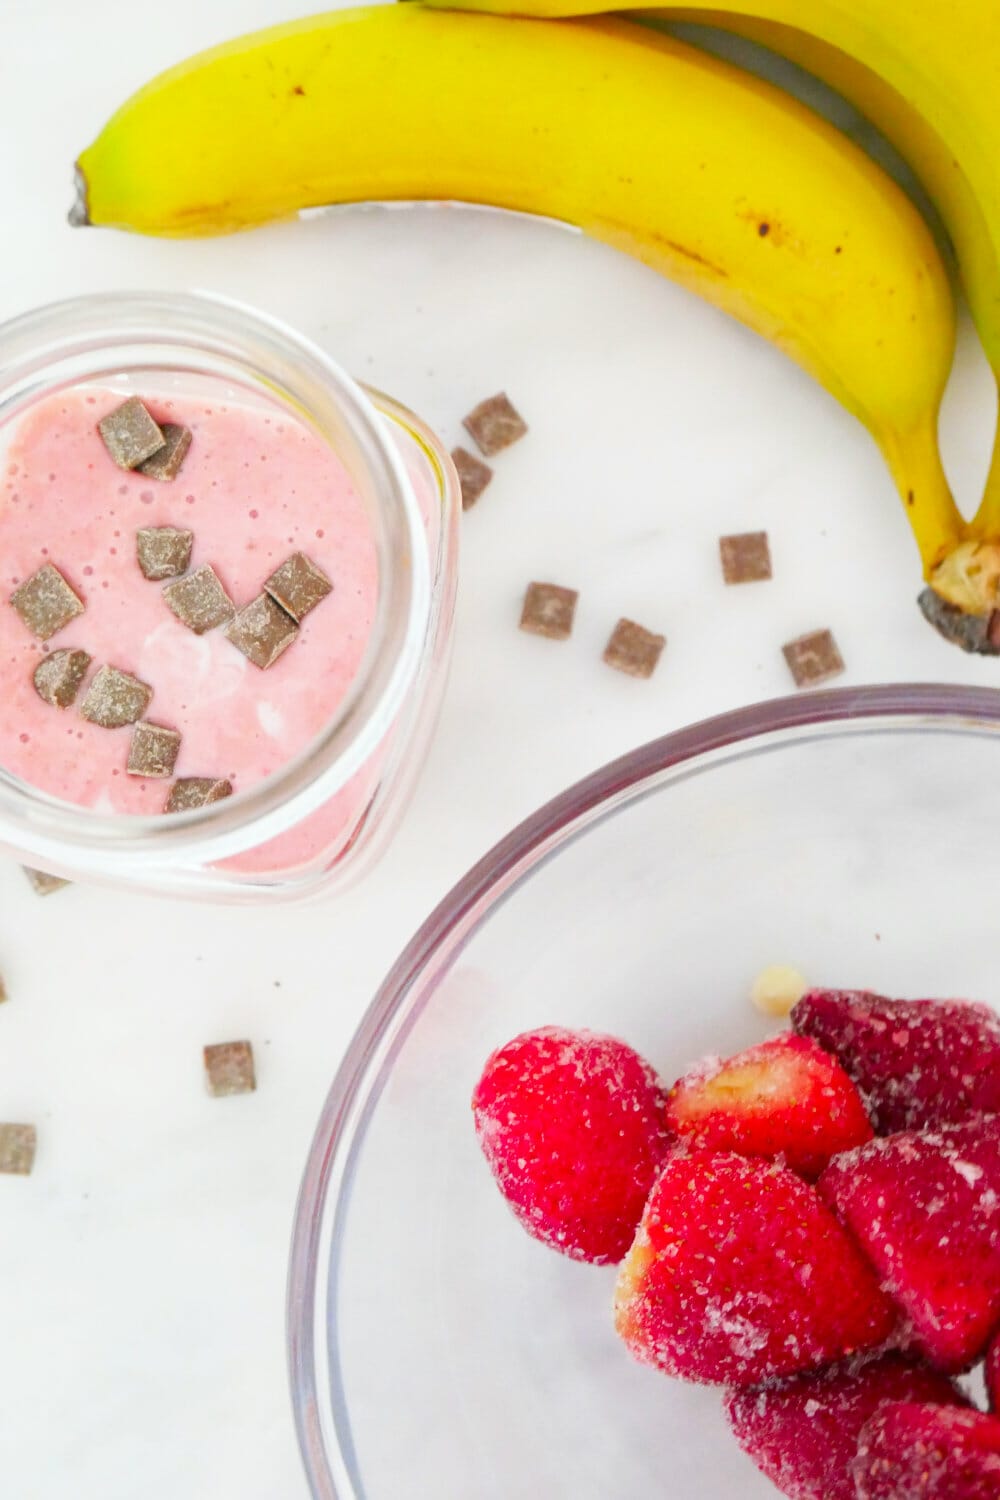 Best easy healthy strawberry banana smoothie recipe with yogurt (+ tips!) via @thesmoothiesite